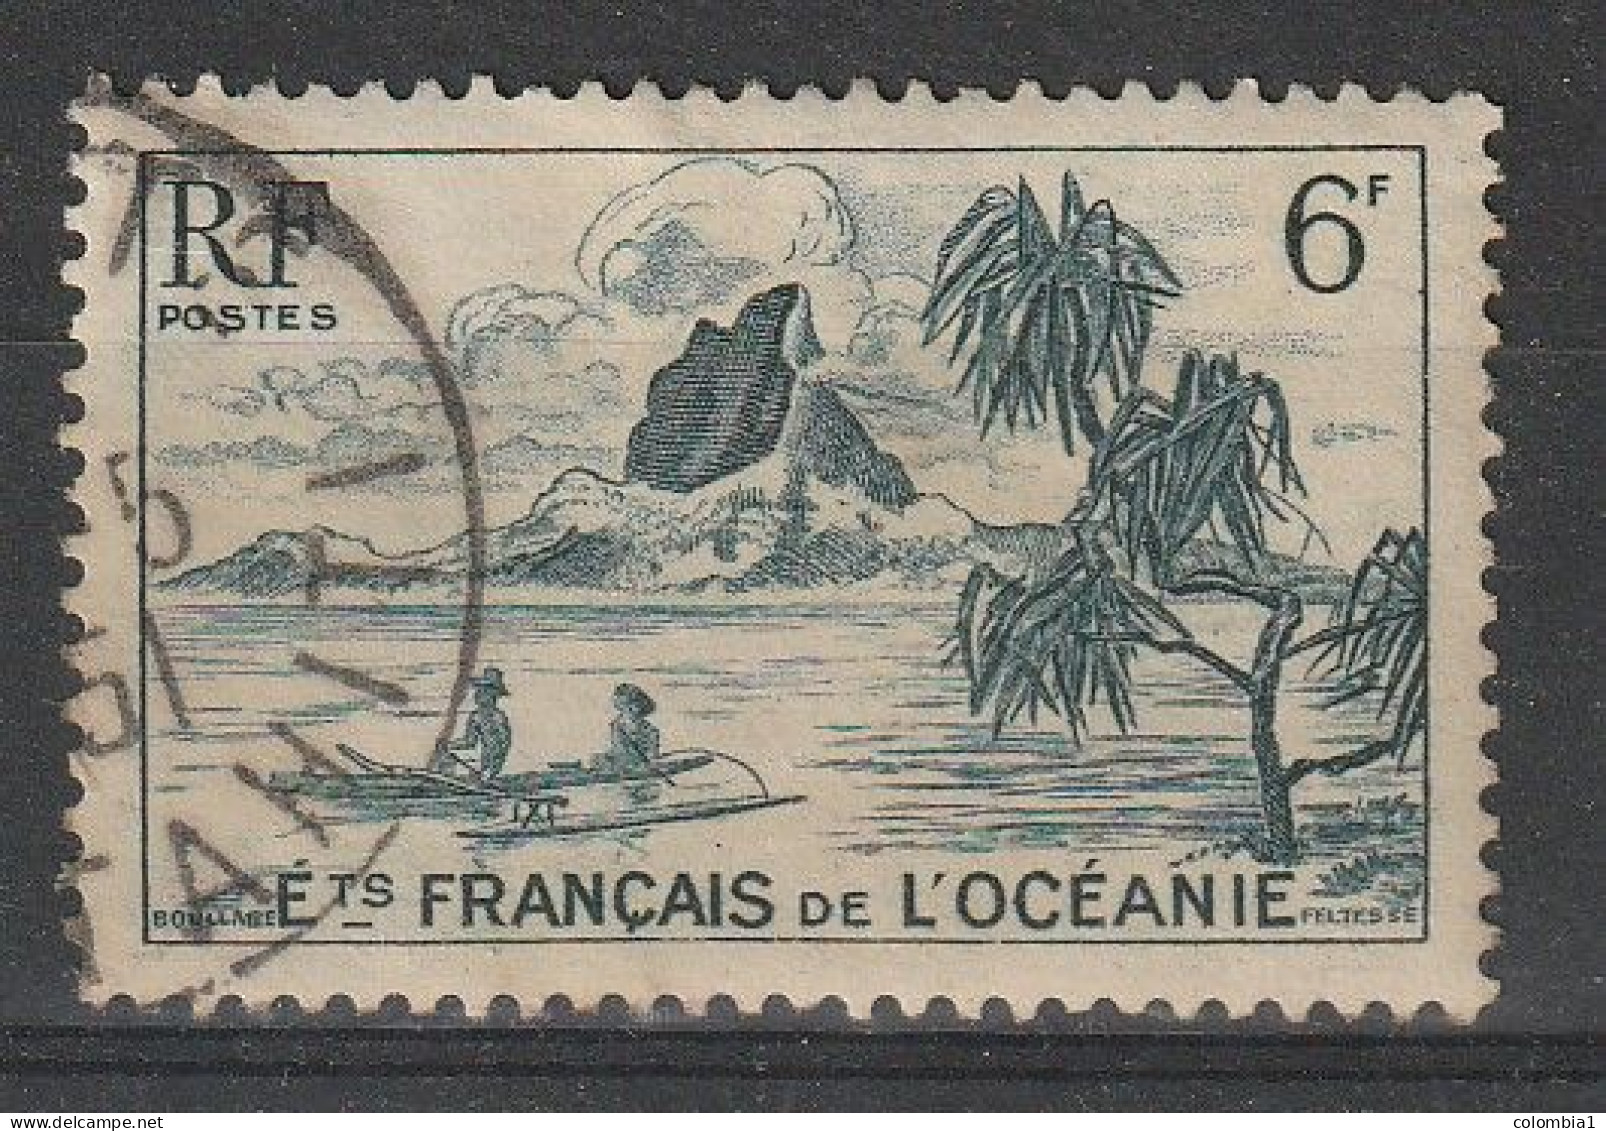 OCEANIE YT 196 Oblitéré Tahiti 1951 - Used Stamps